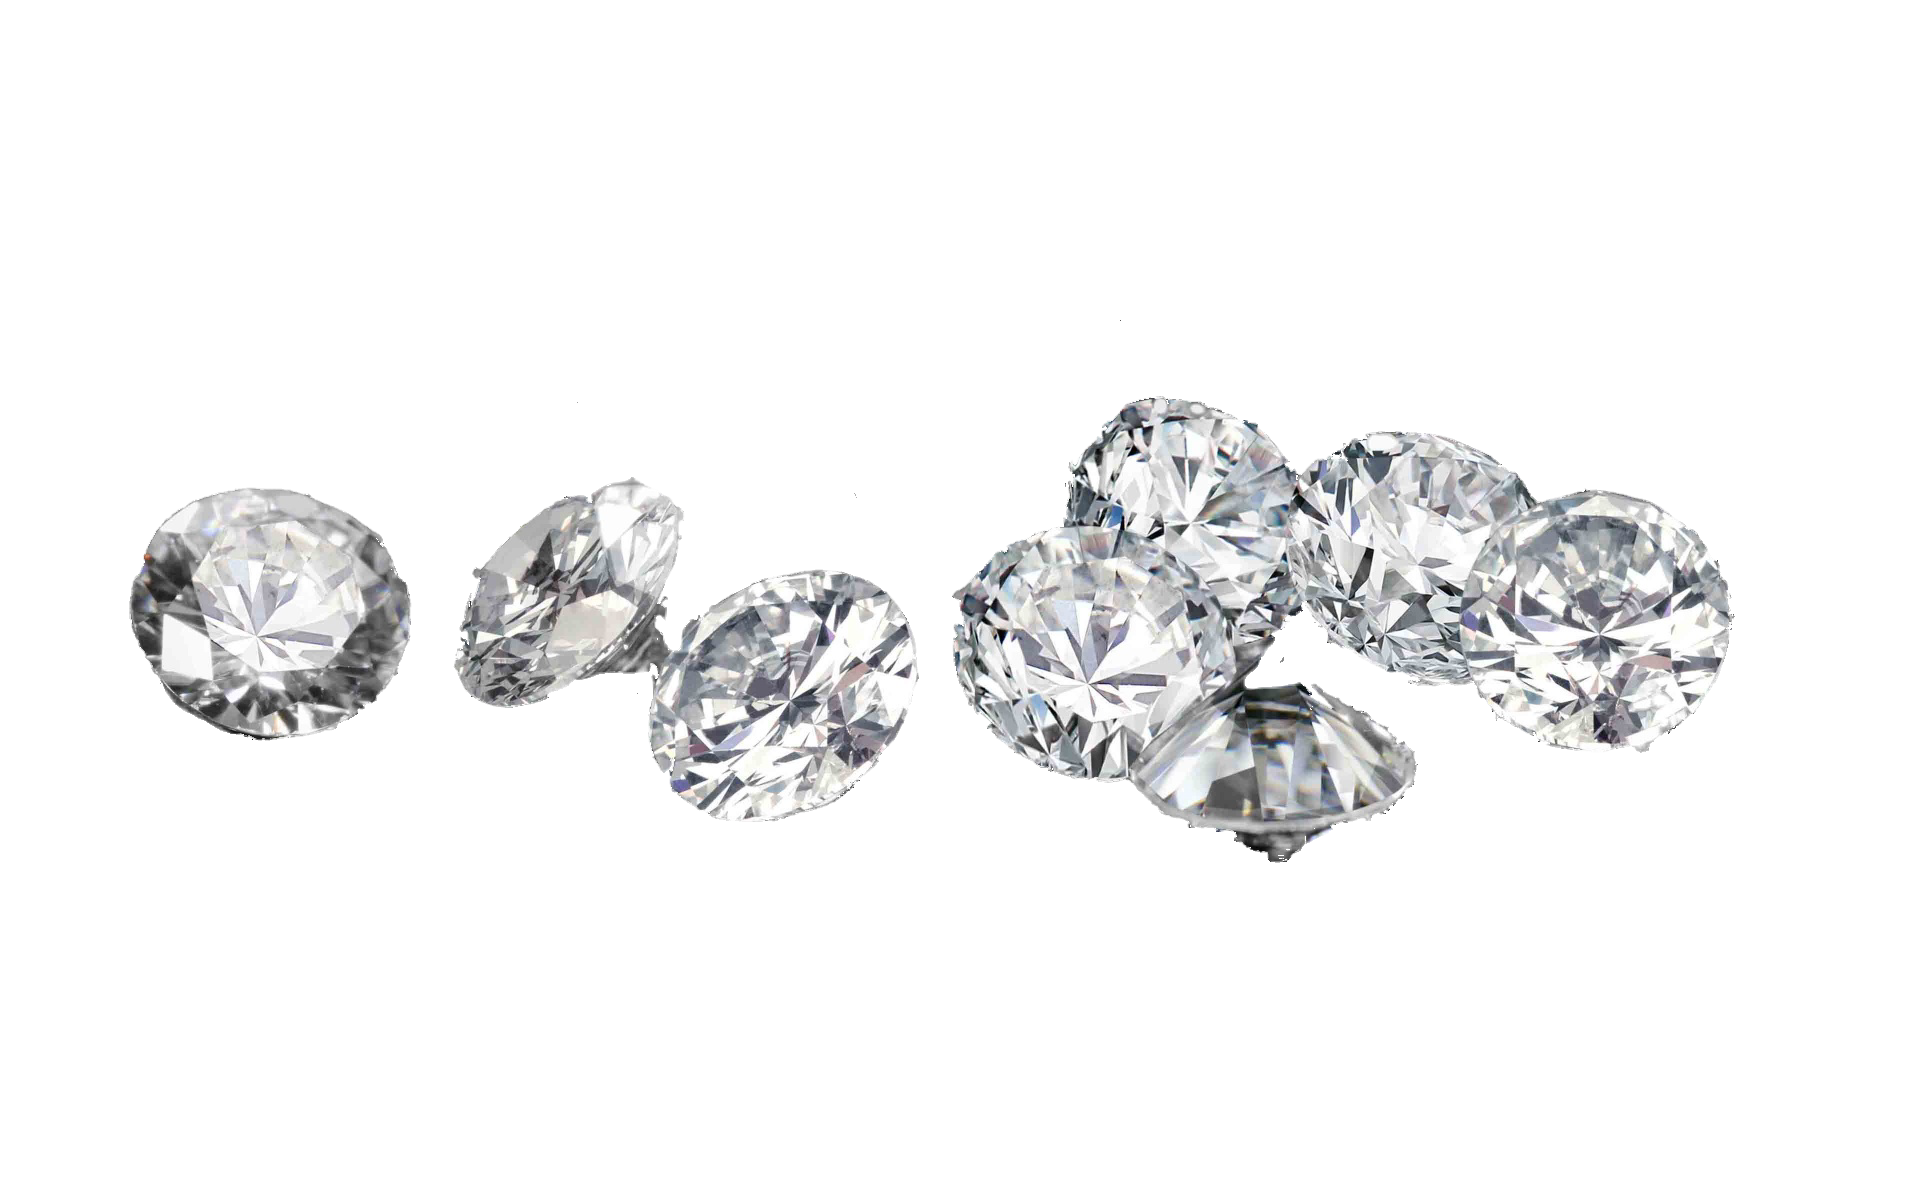 Diamond Png Transparent Diamo